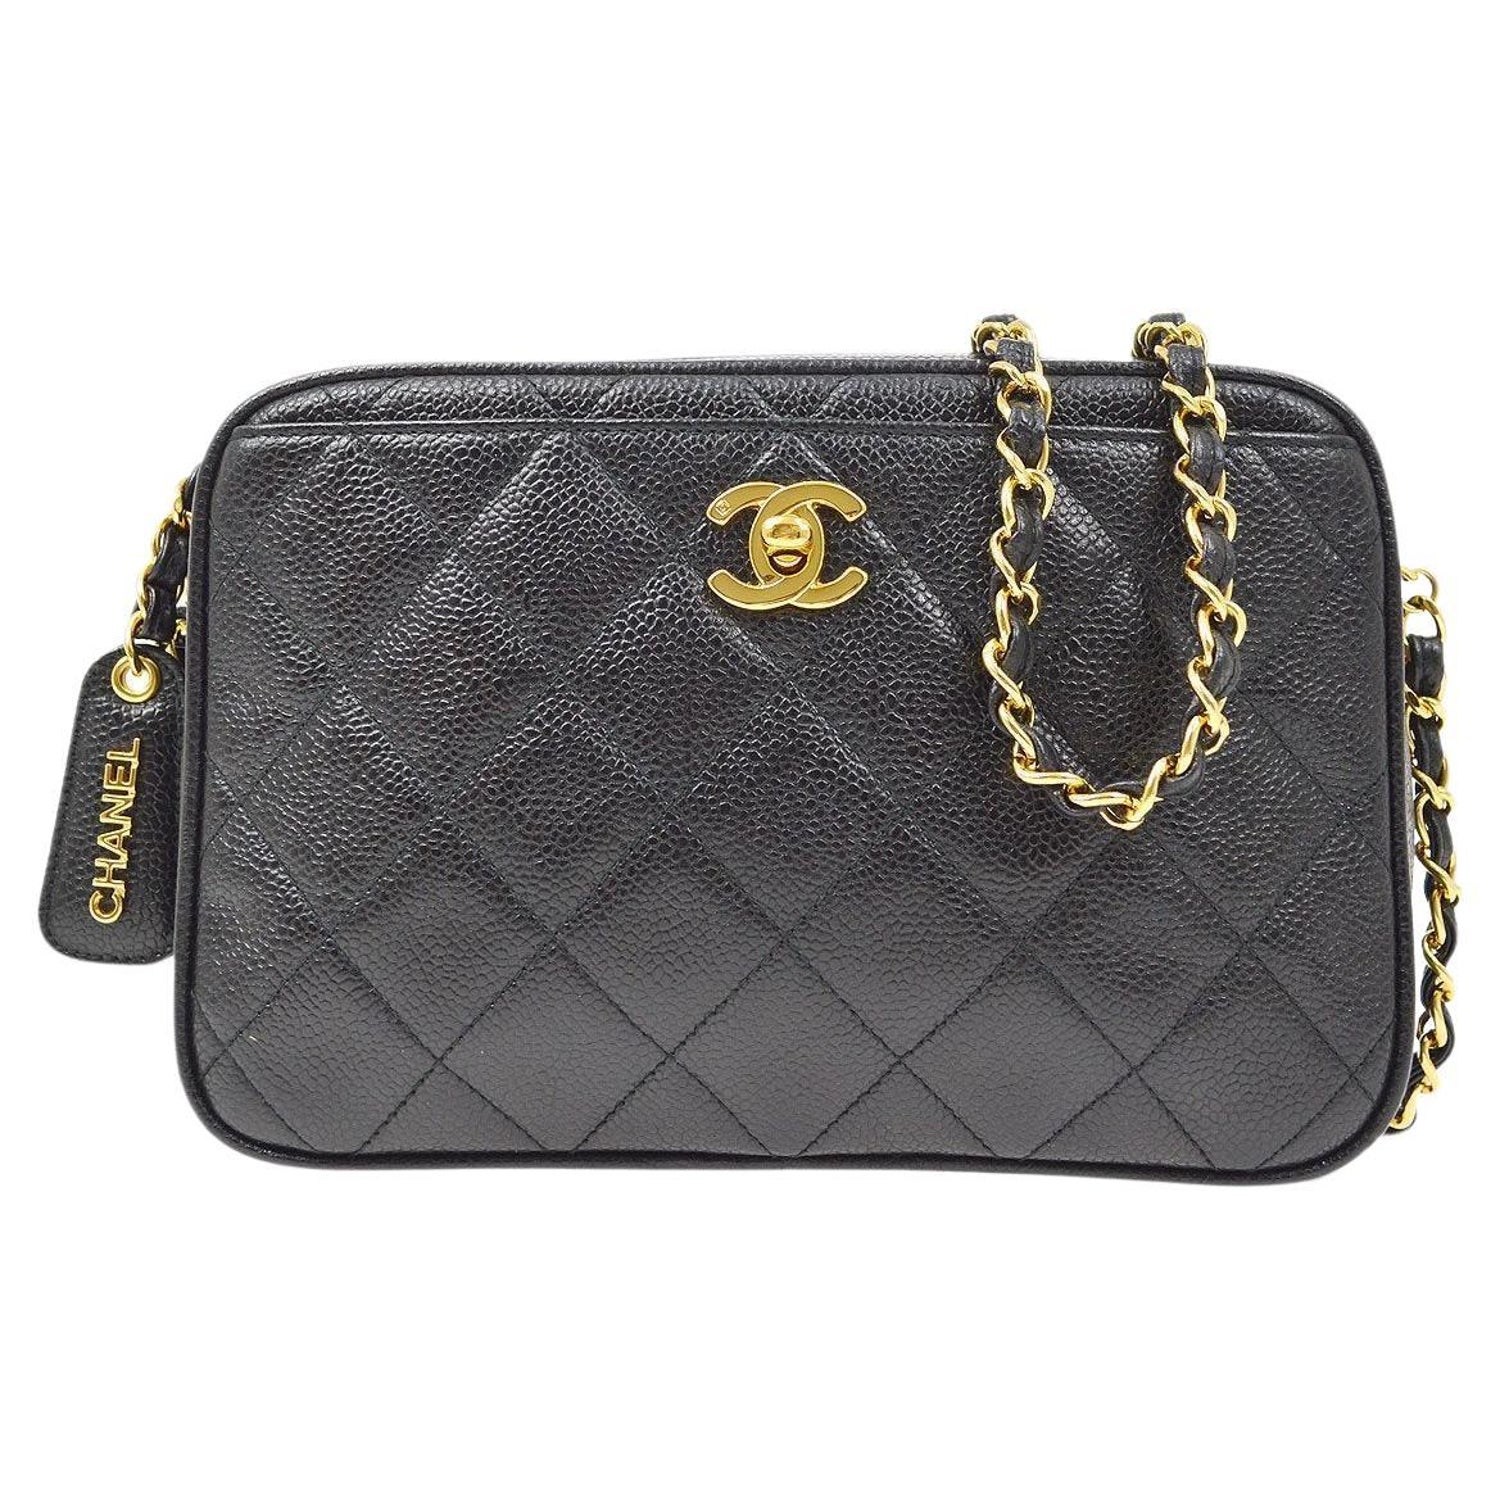 Chanel Satin Bag - 139 For Sale on 1stDibs